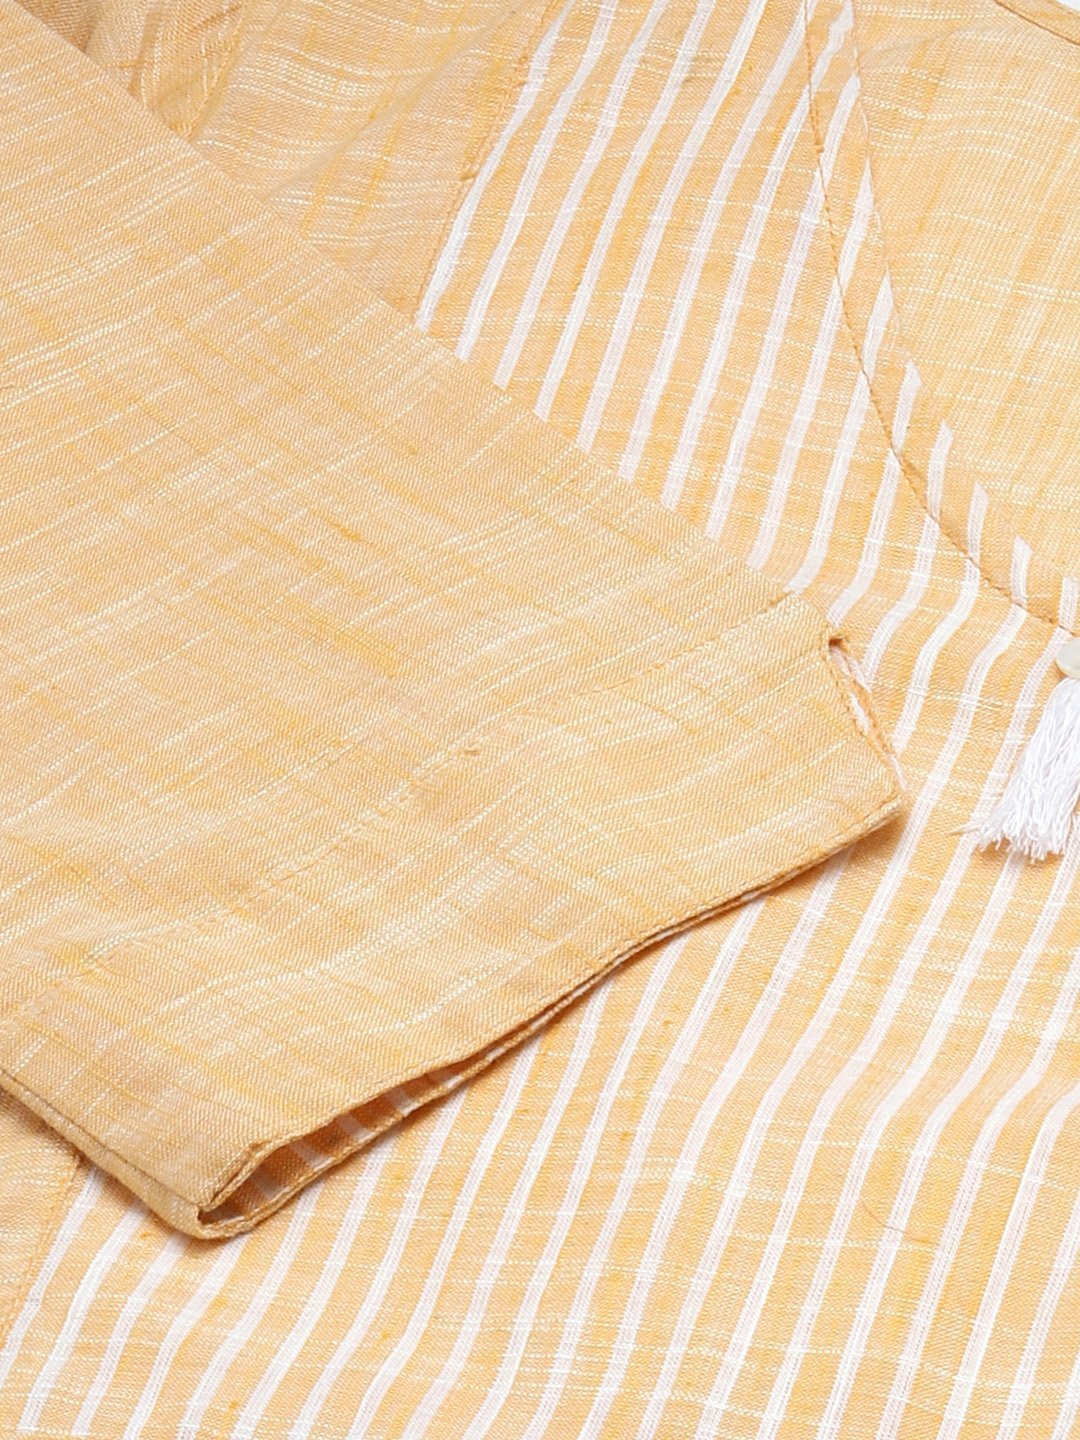 Women's Yellow Pure Cotton Striped Pleated Kurta - Jompers